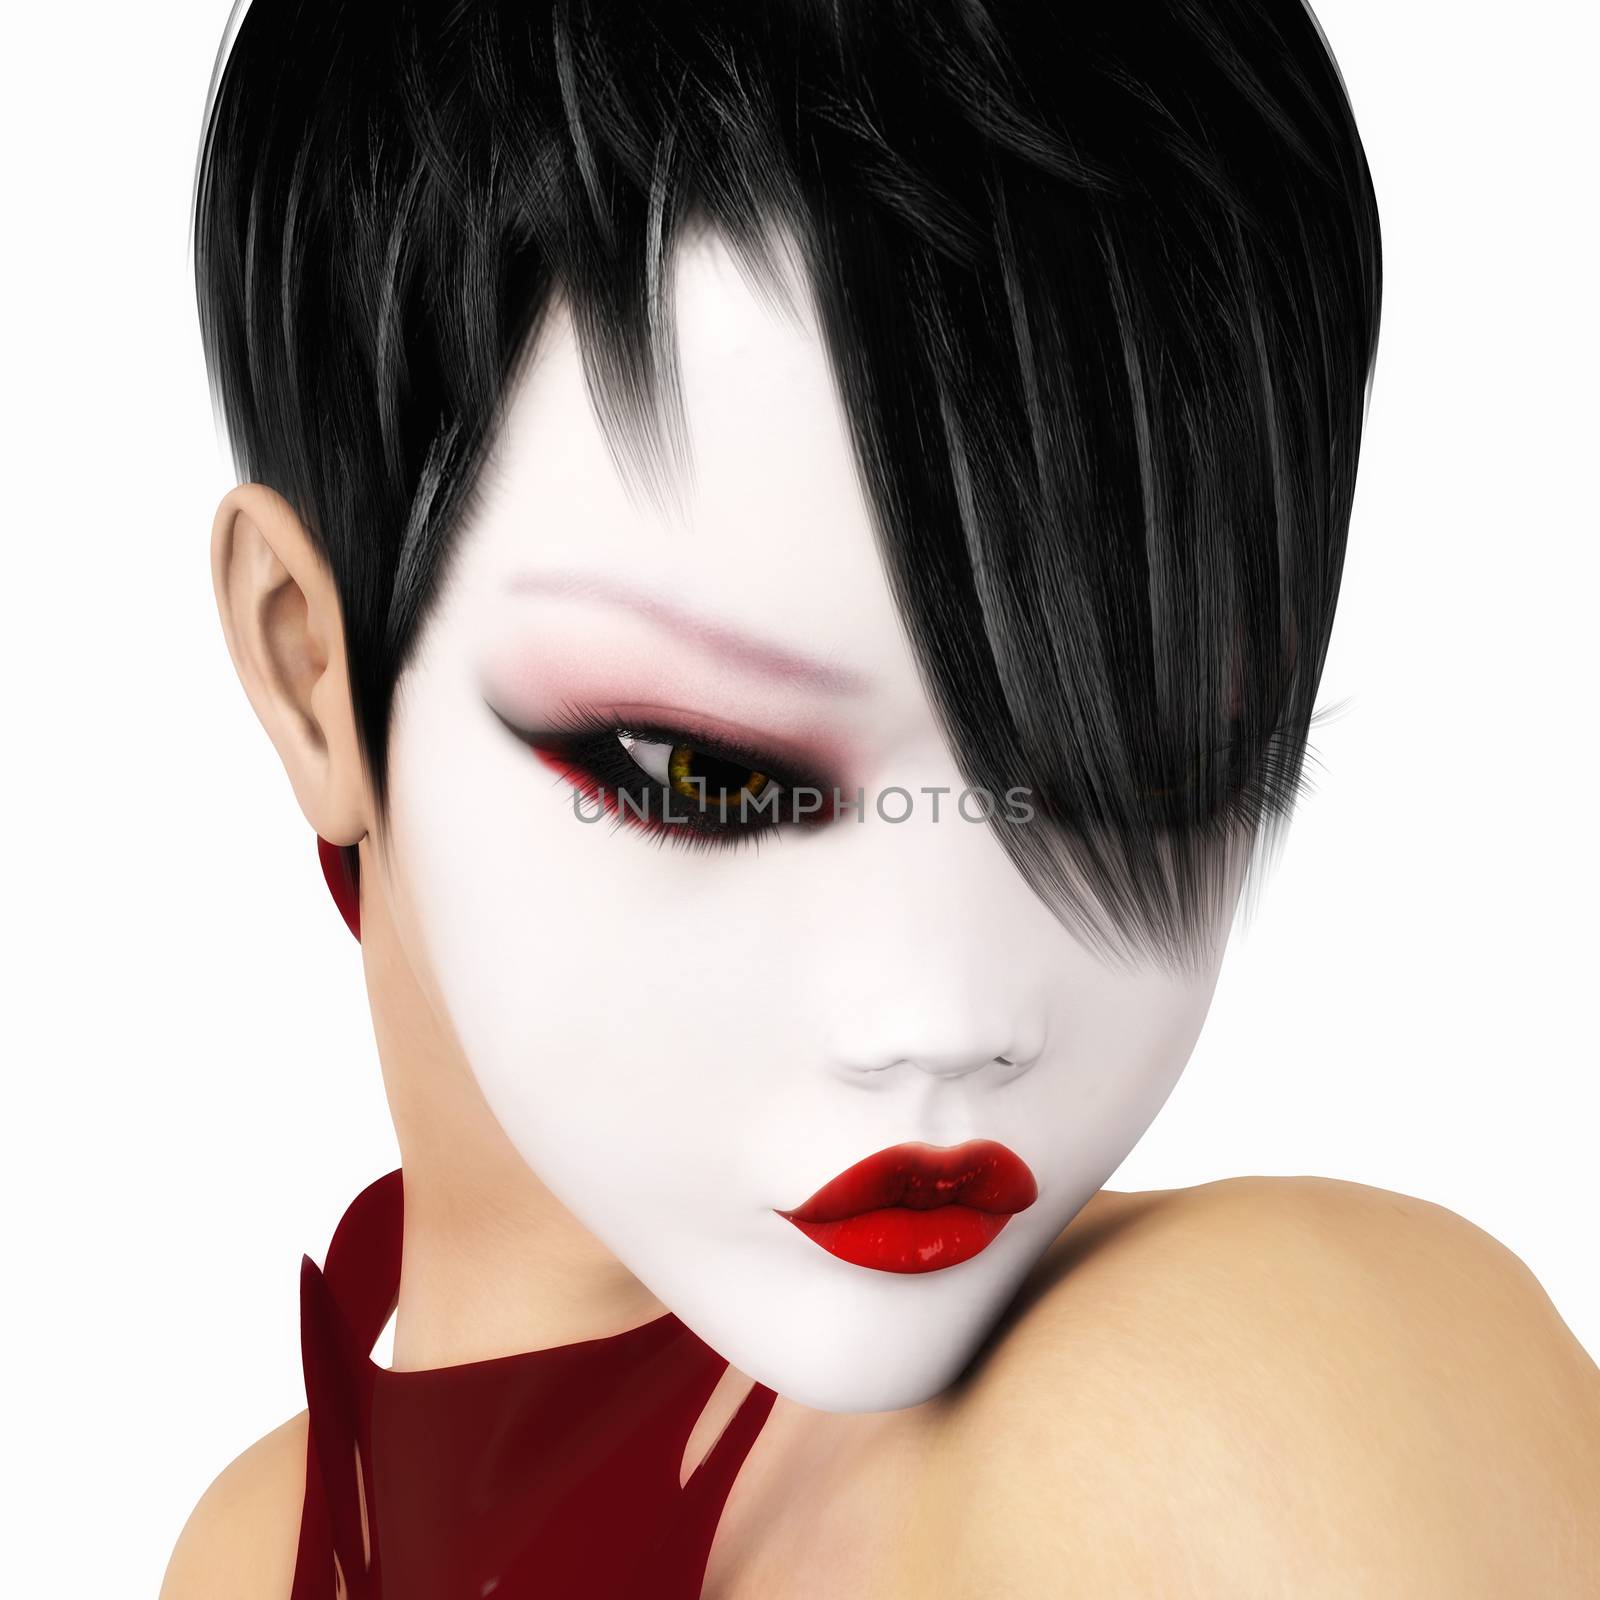 Digital Illustration of a female japanese Face